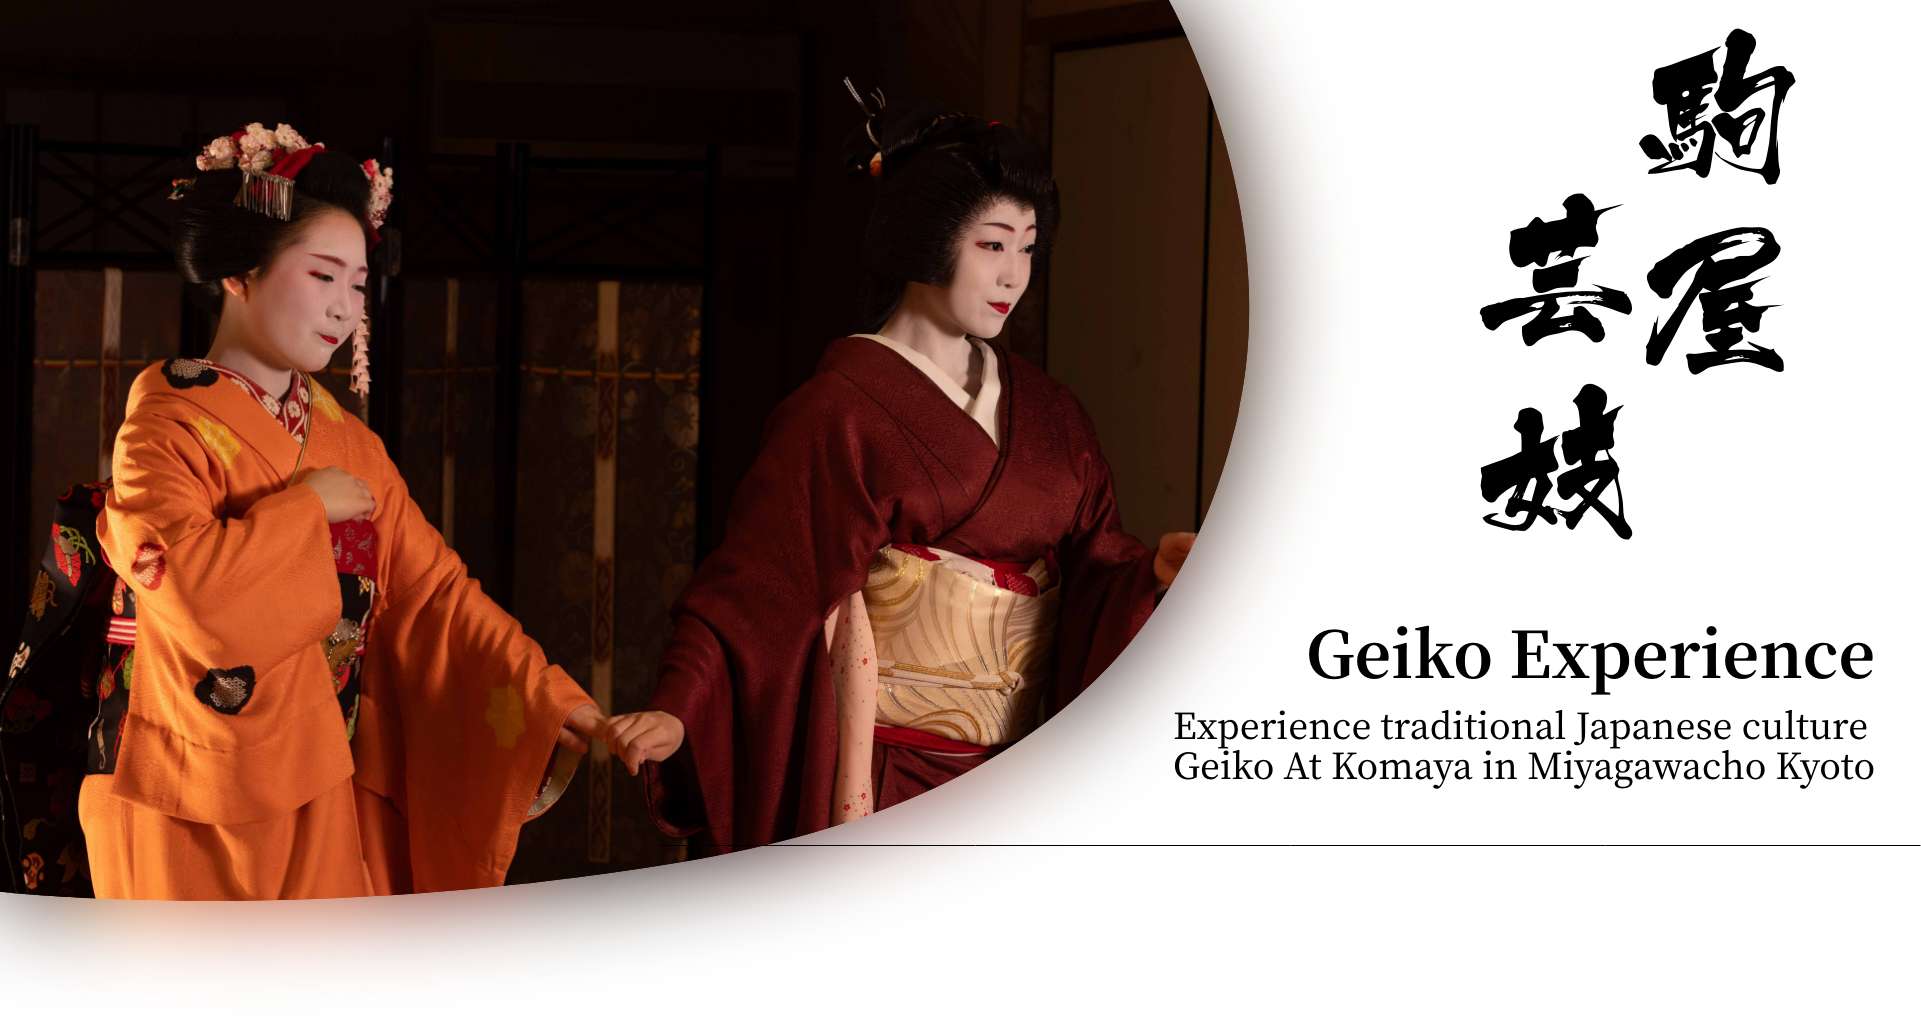 Geiko Experience - Experience traditional Japanese culture Geiko in Miyagawacho Kyoto